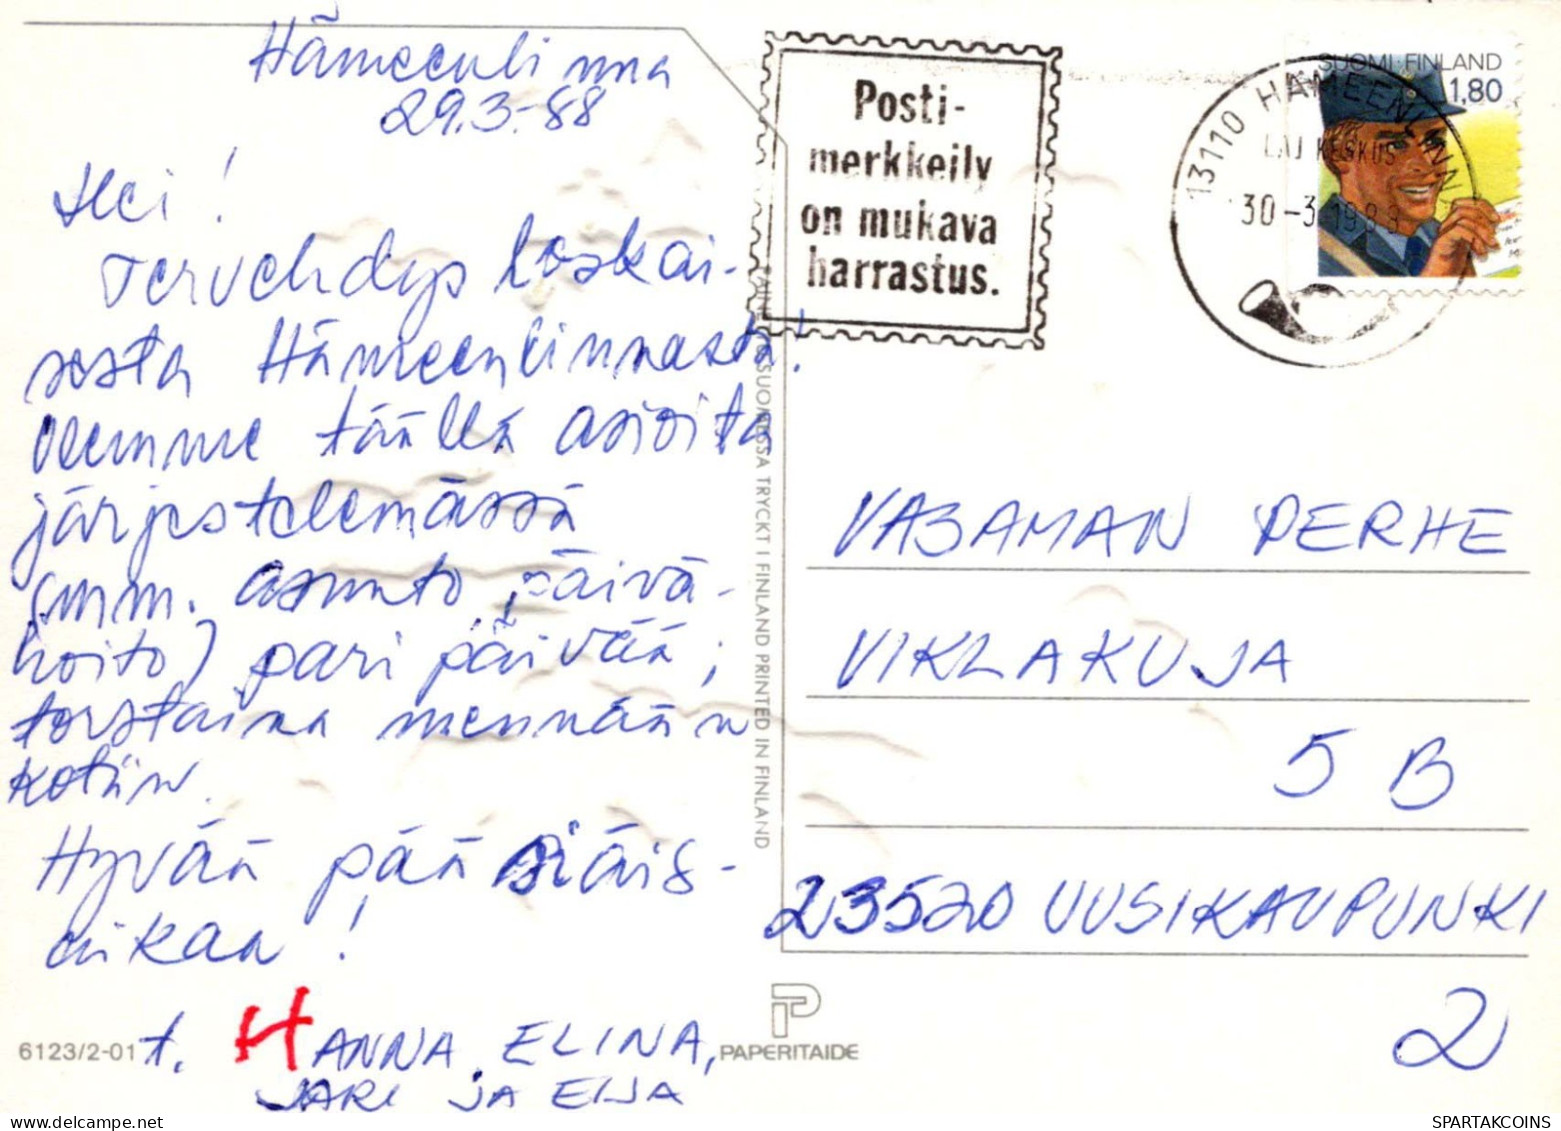 EASTER RABBIT Vintage Postcard CPSM #PBO546.A - Ostern